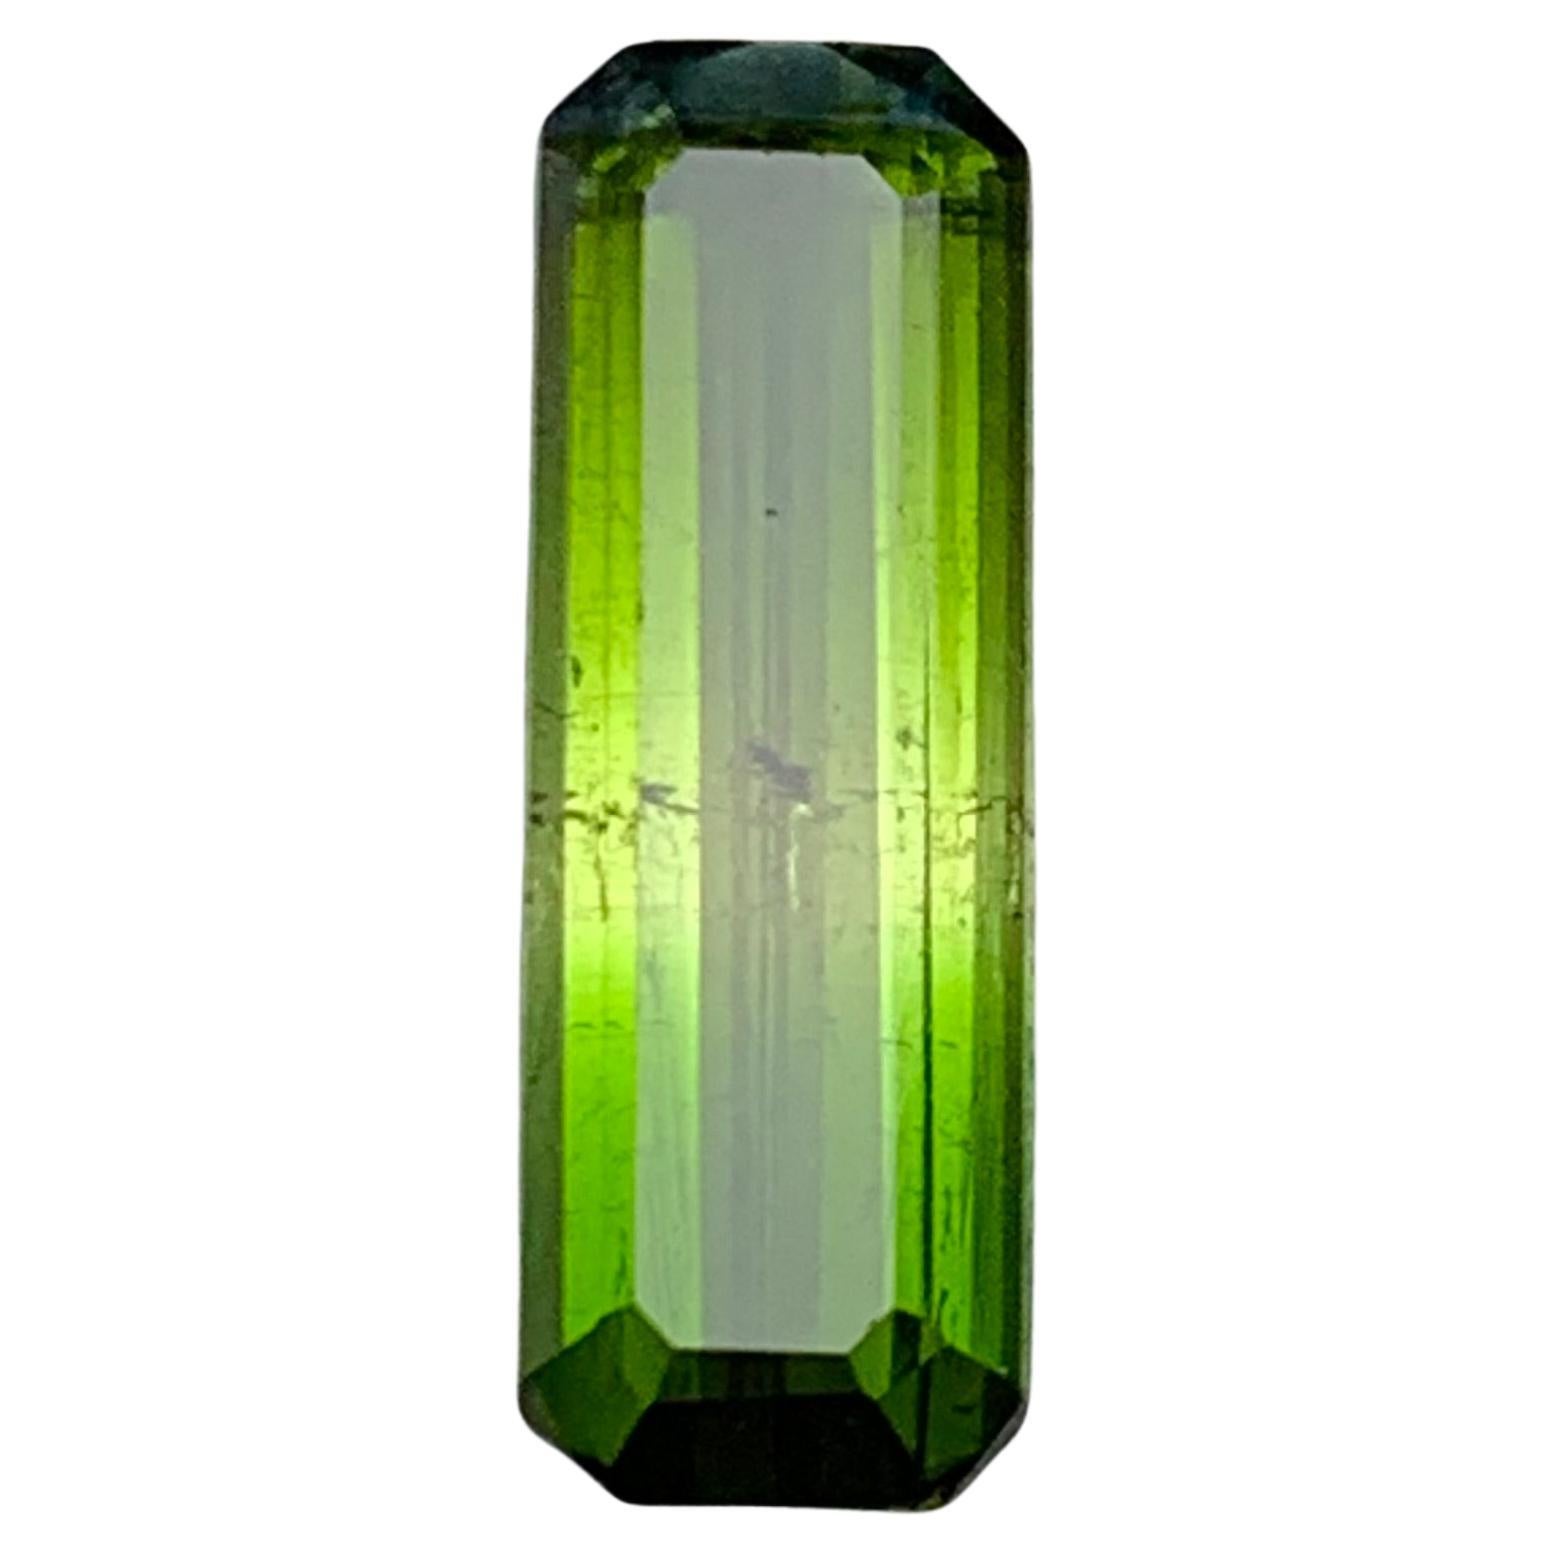 Rare Vivid Green & Yellow Hue Bicolor Tourmaline Gemstone, 3.15 Ct Emerald Cut For Sale